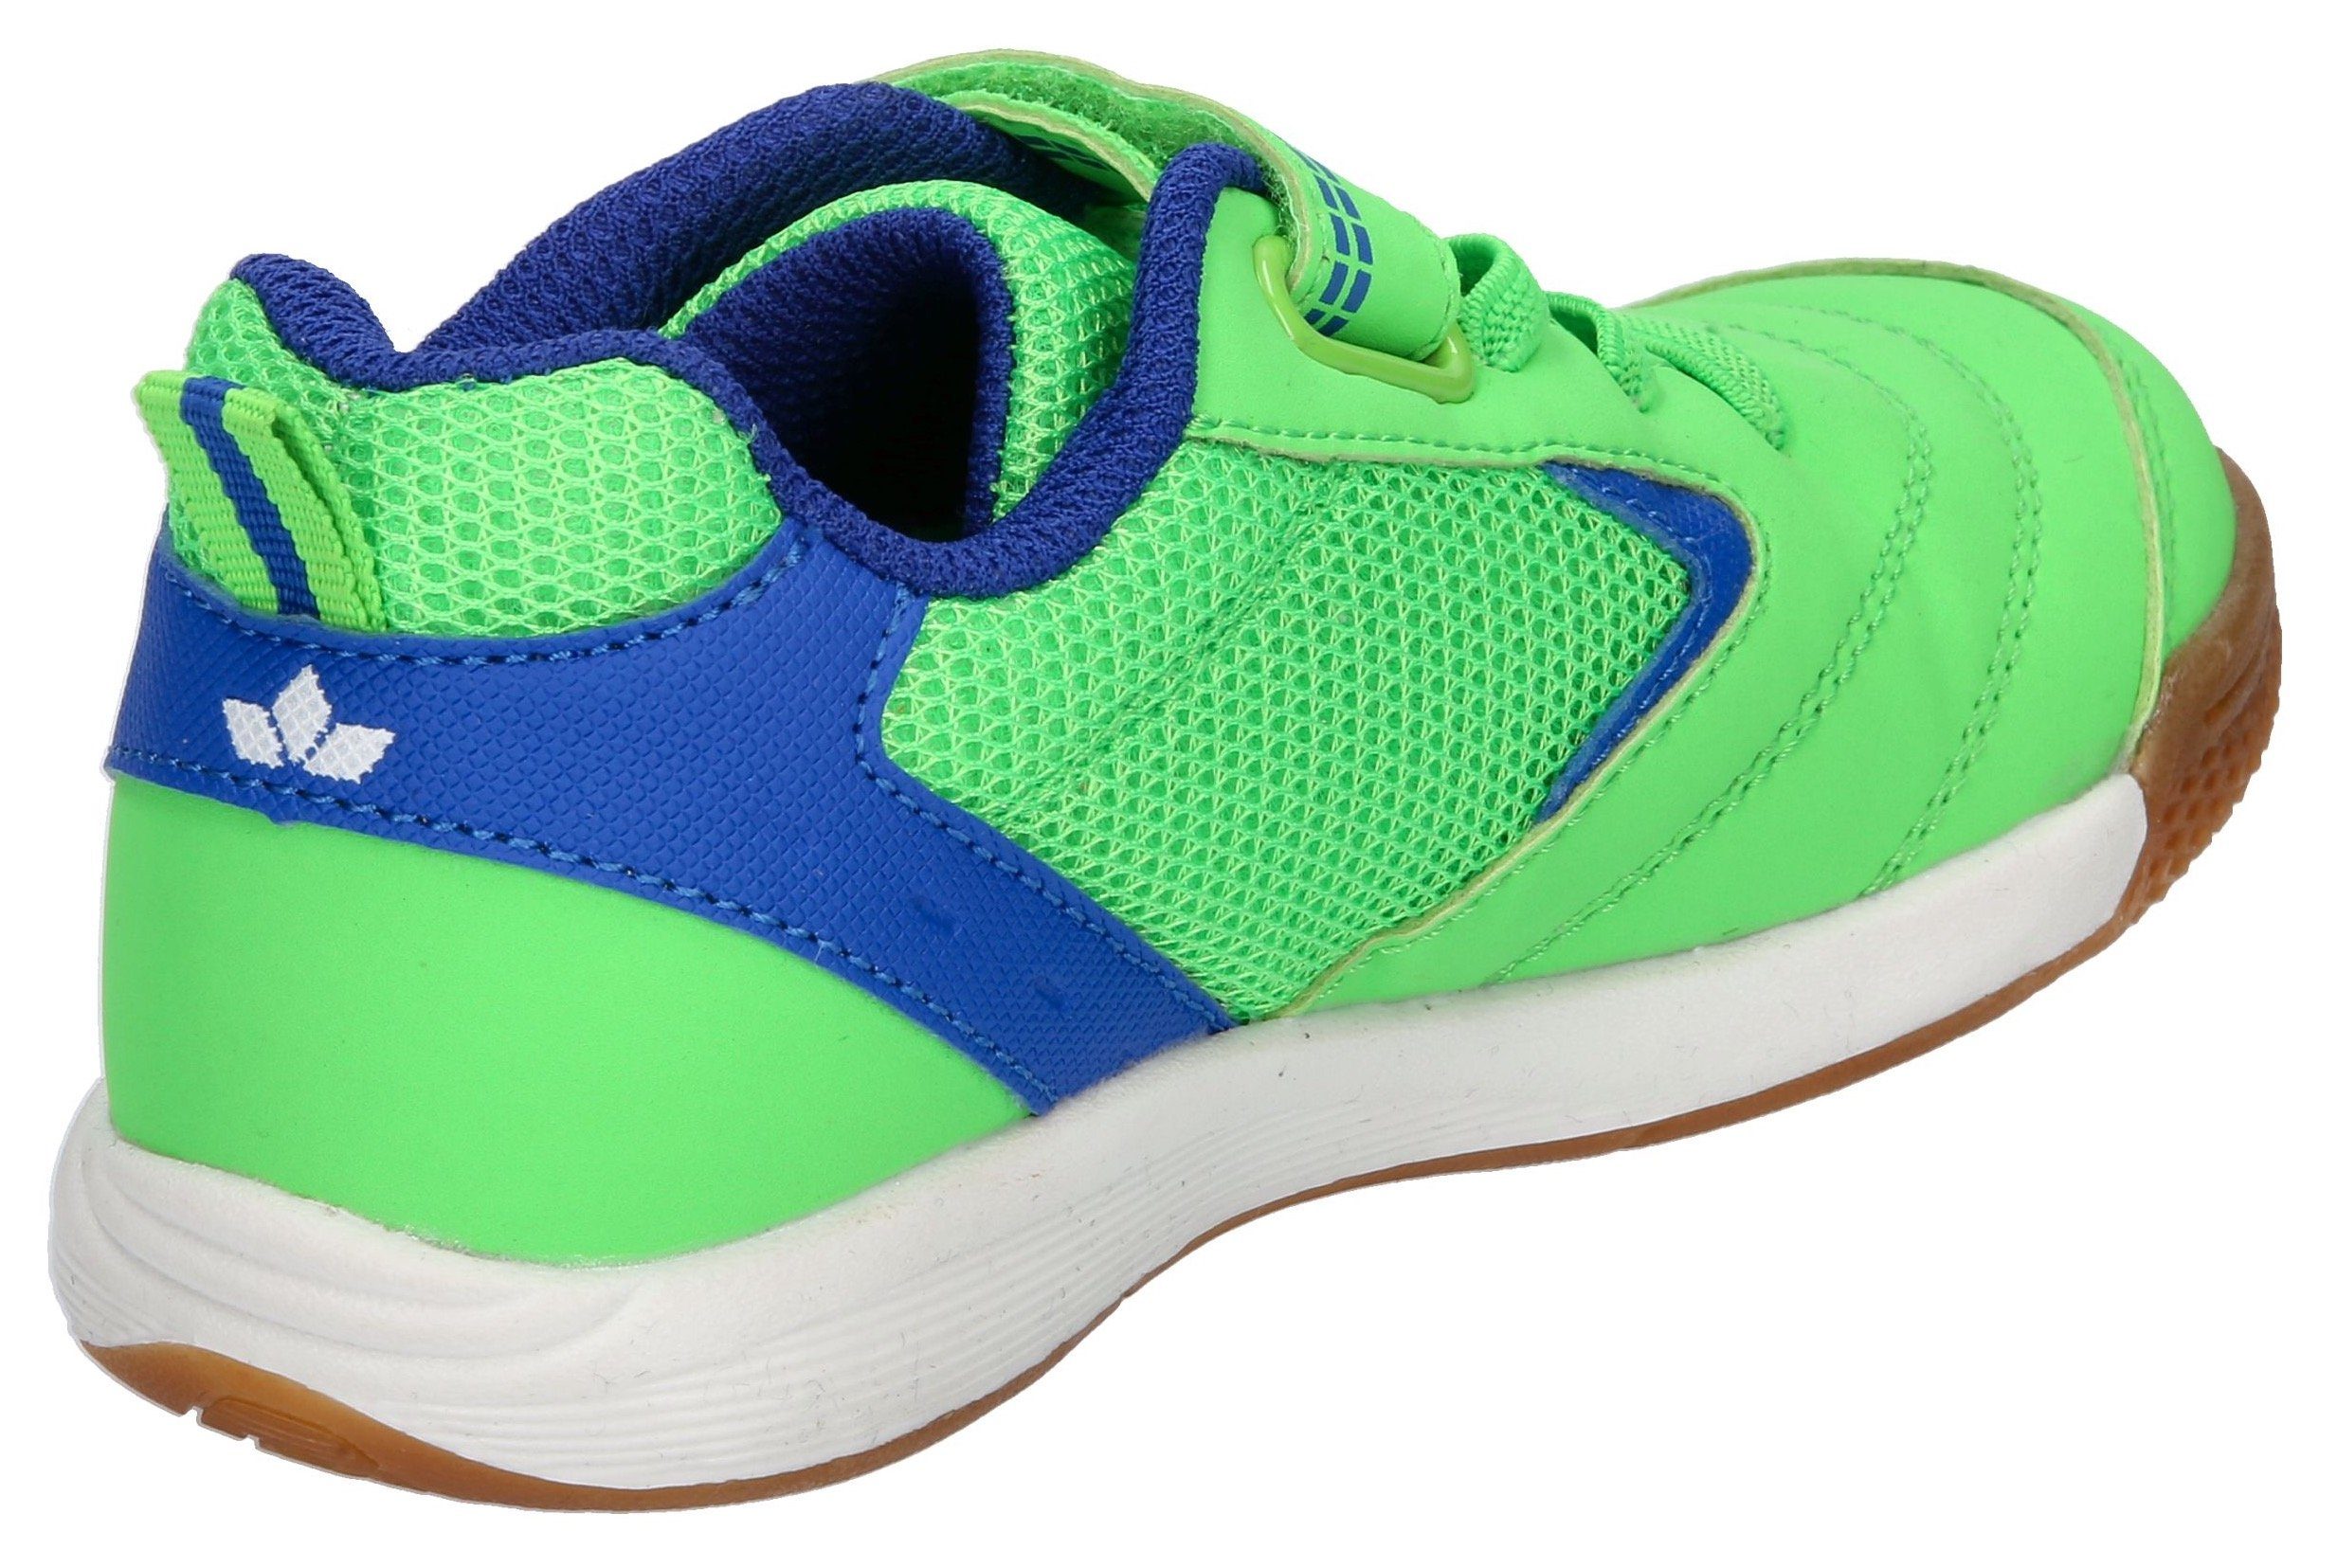 Ari VS Sneaker Laufsohle mit grün-blau Lico heller WMS